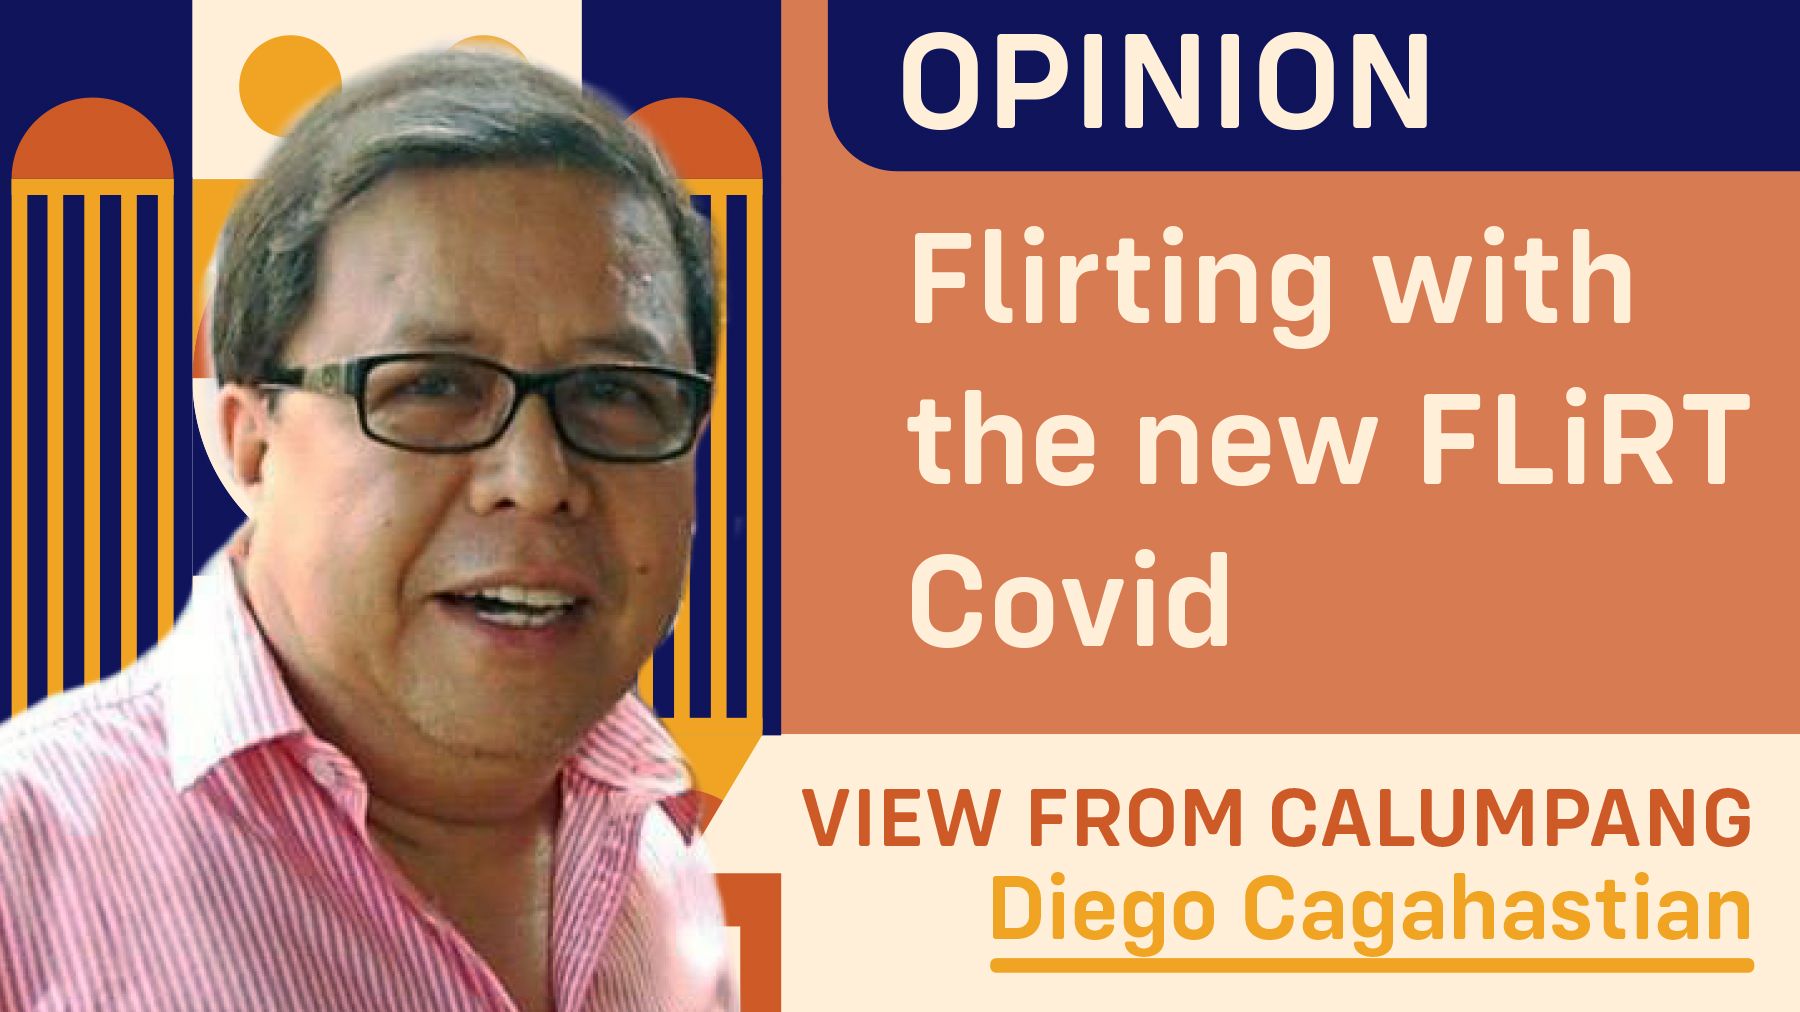 Flirting with the new FLiRT Covid